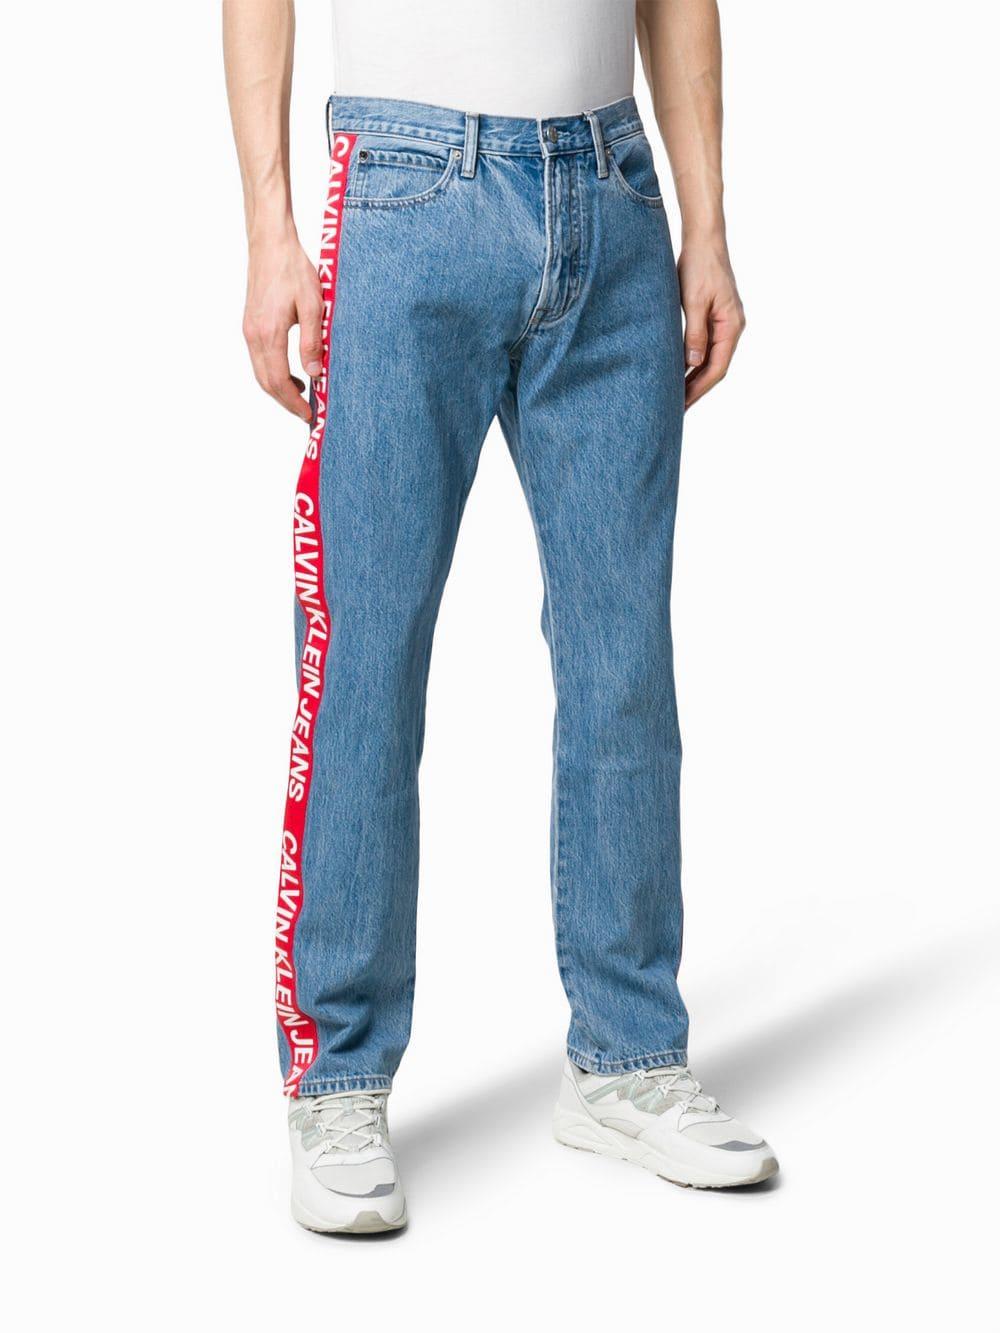 Calvin Klein Denim Logo Stripe Jeans in Blue for Men - Lyst